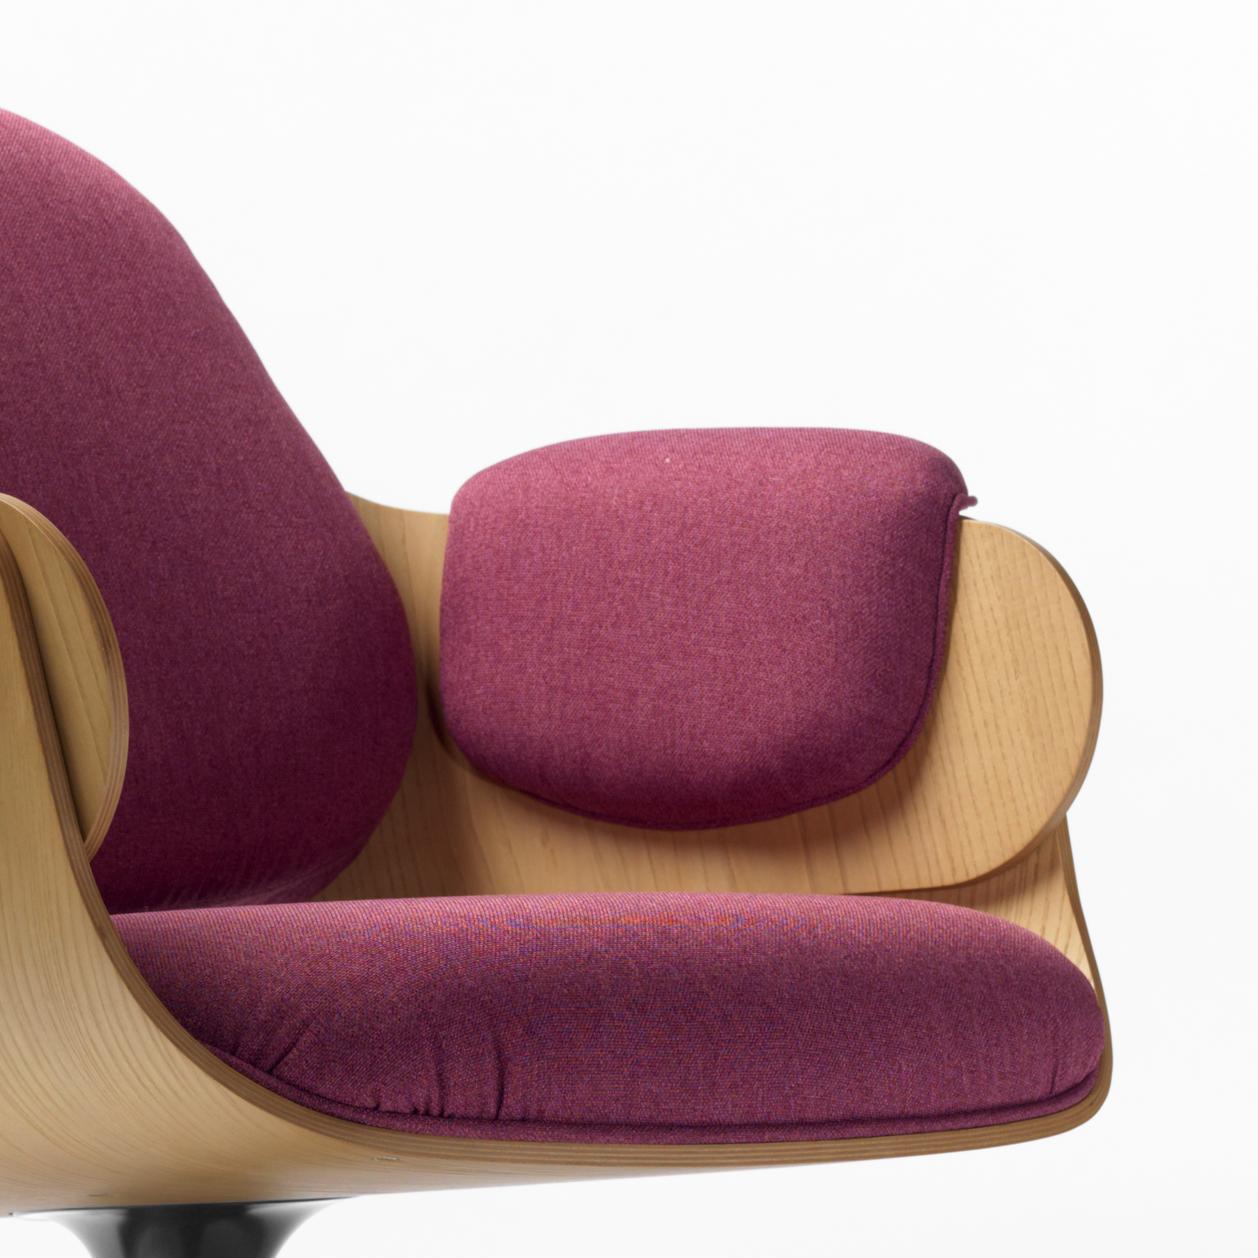 Modern Jaime Hayon, Contemporary, Oak, Fuchsia Upholstery Low Lounger Armchair